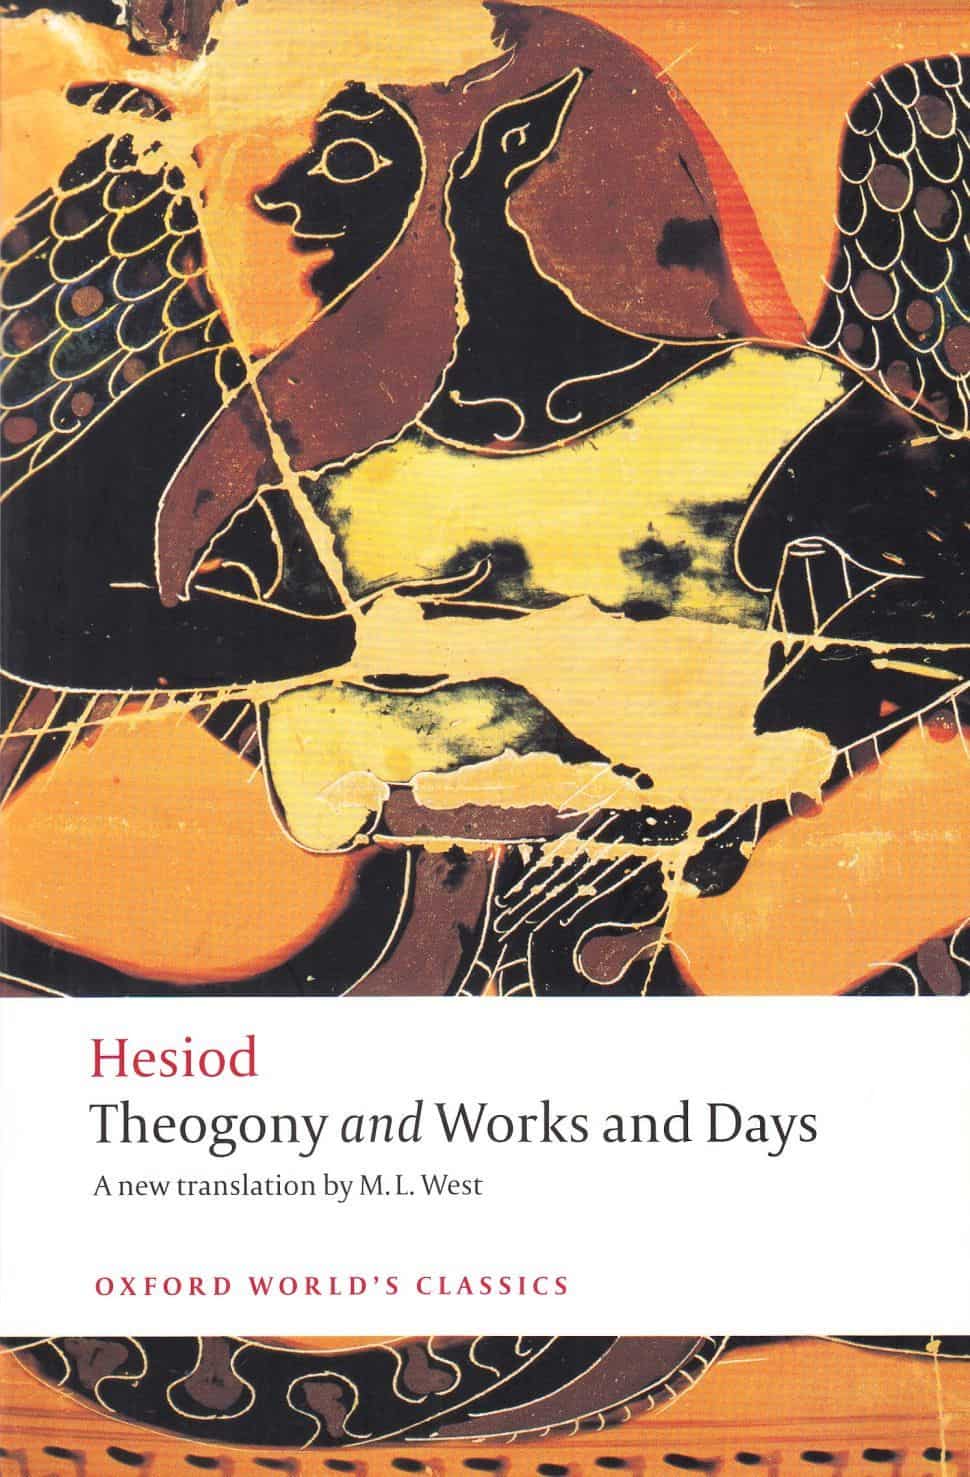 Theogony by Hesiod, translated by M.L. West